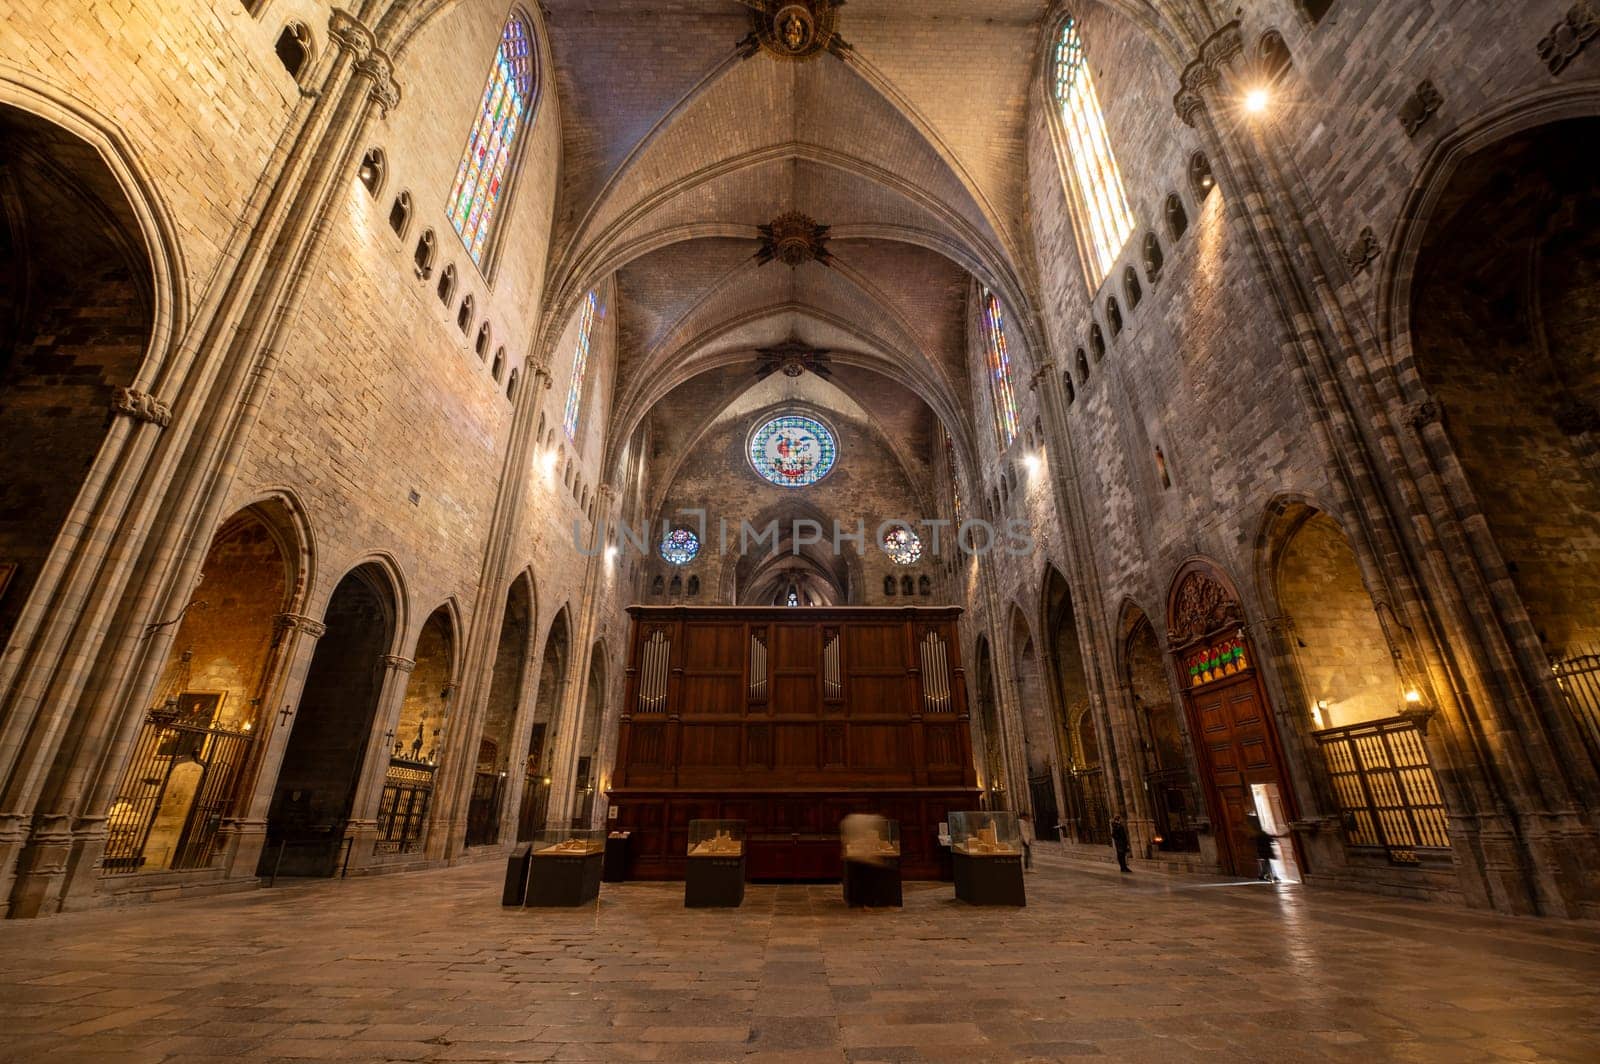  Cathedral of Santa María of Ginona, Spain by martinscphoto